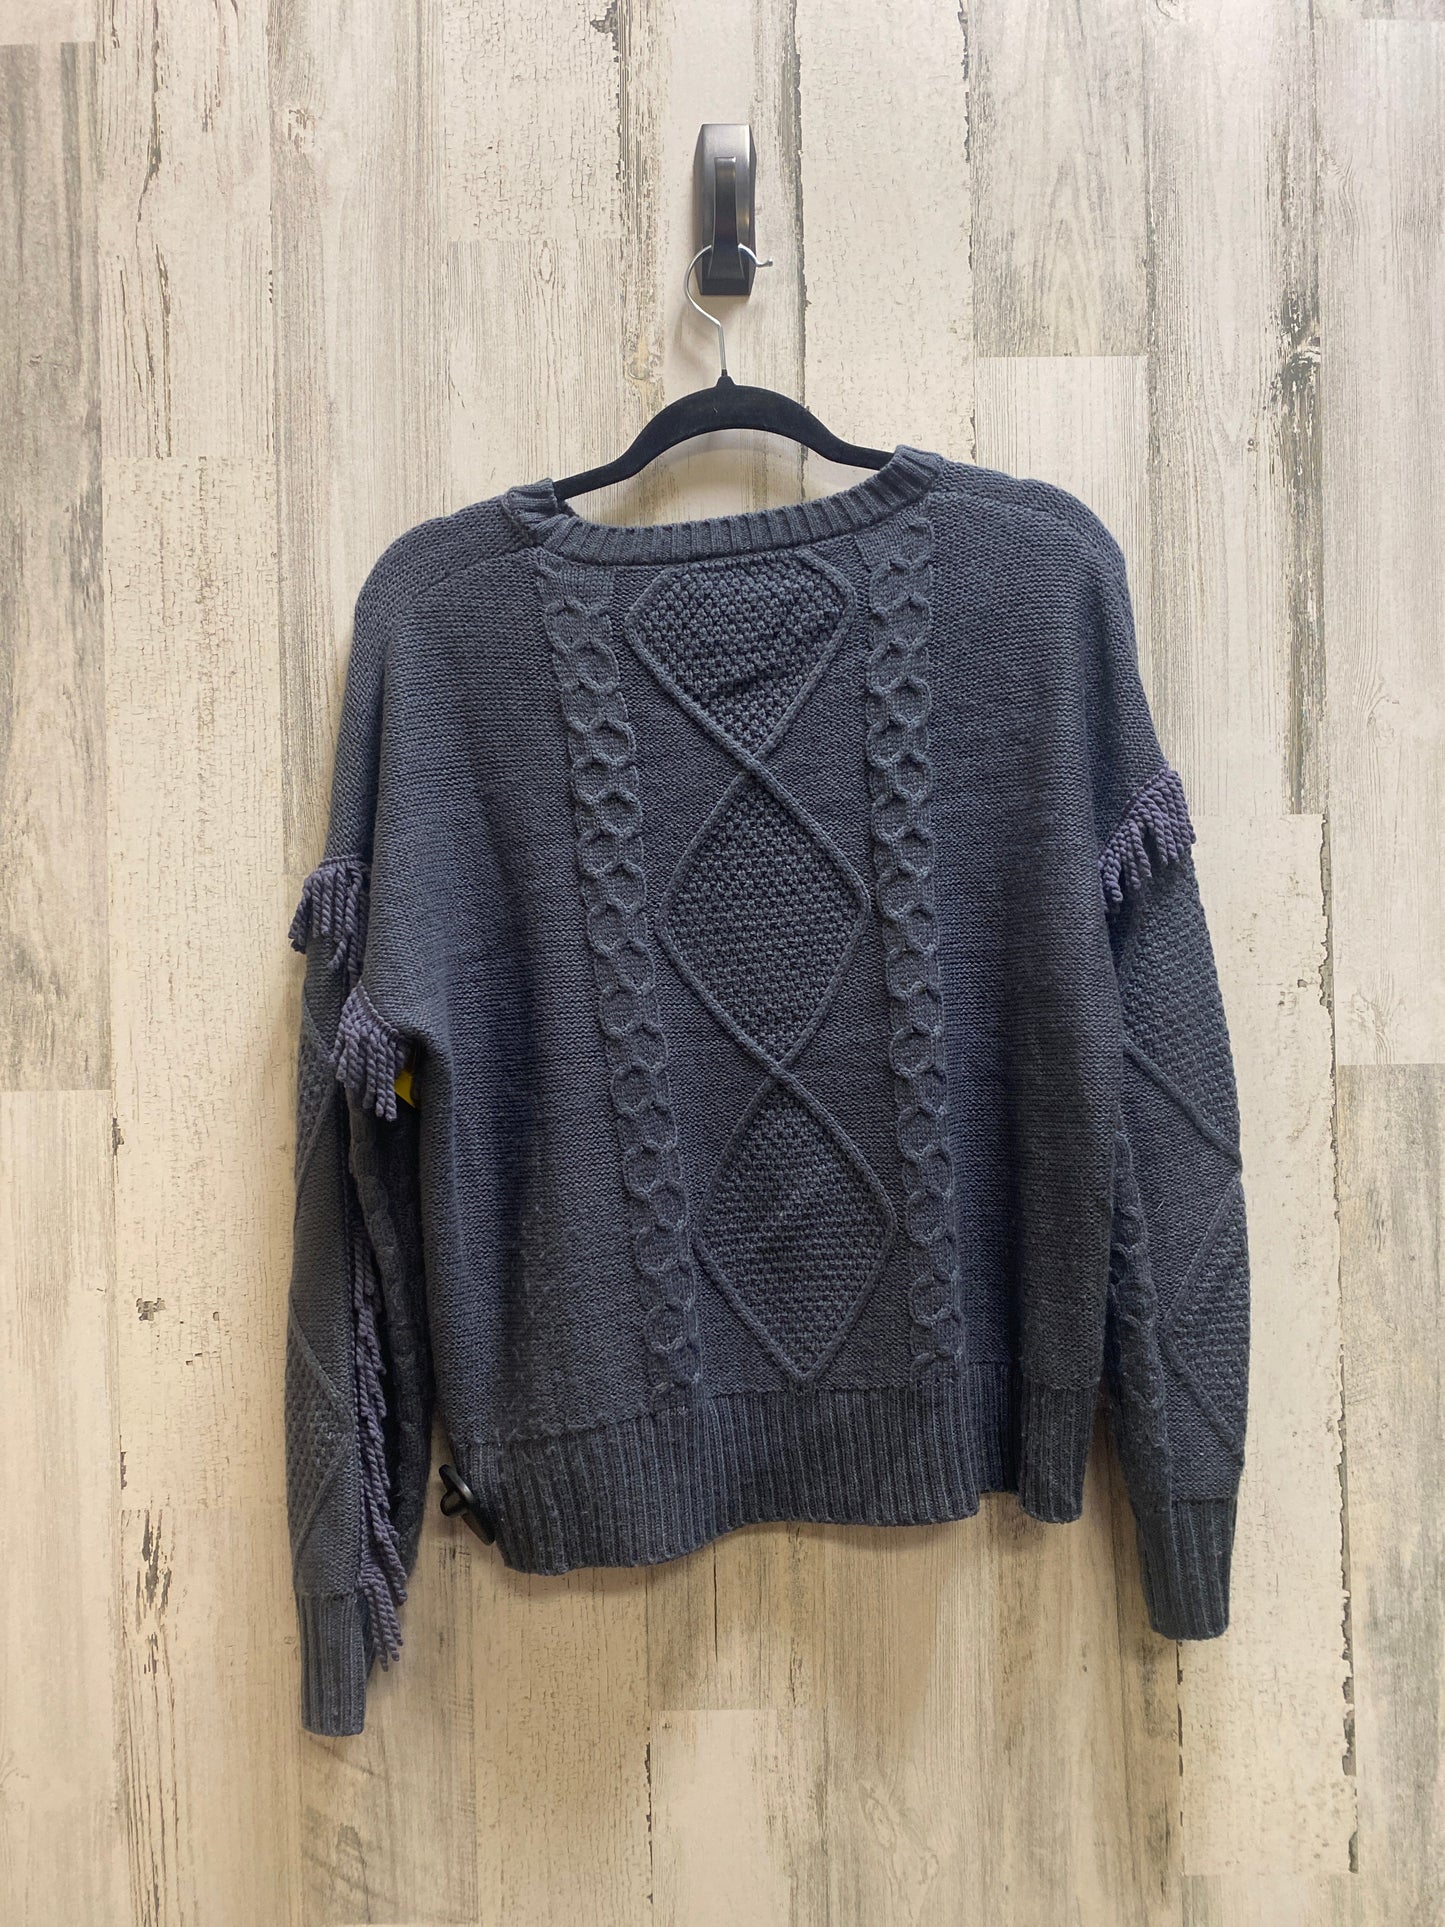 Sweater By Belldini  Size: L